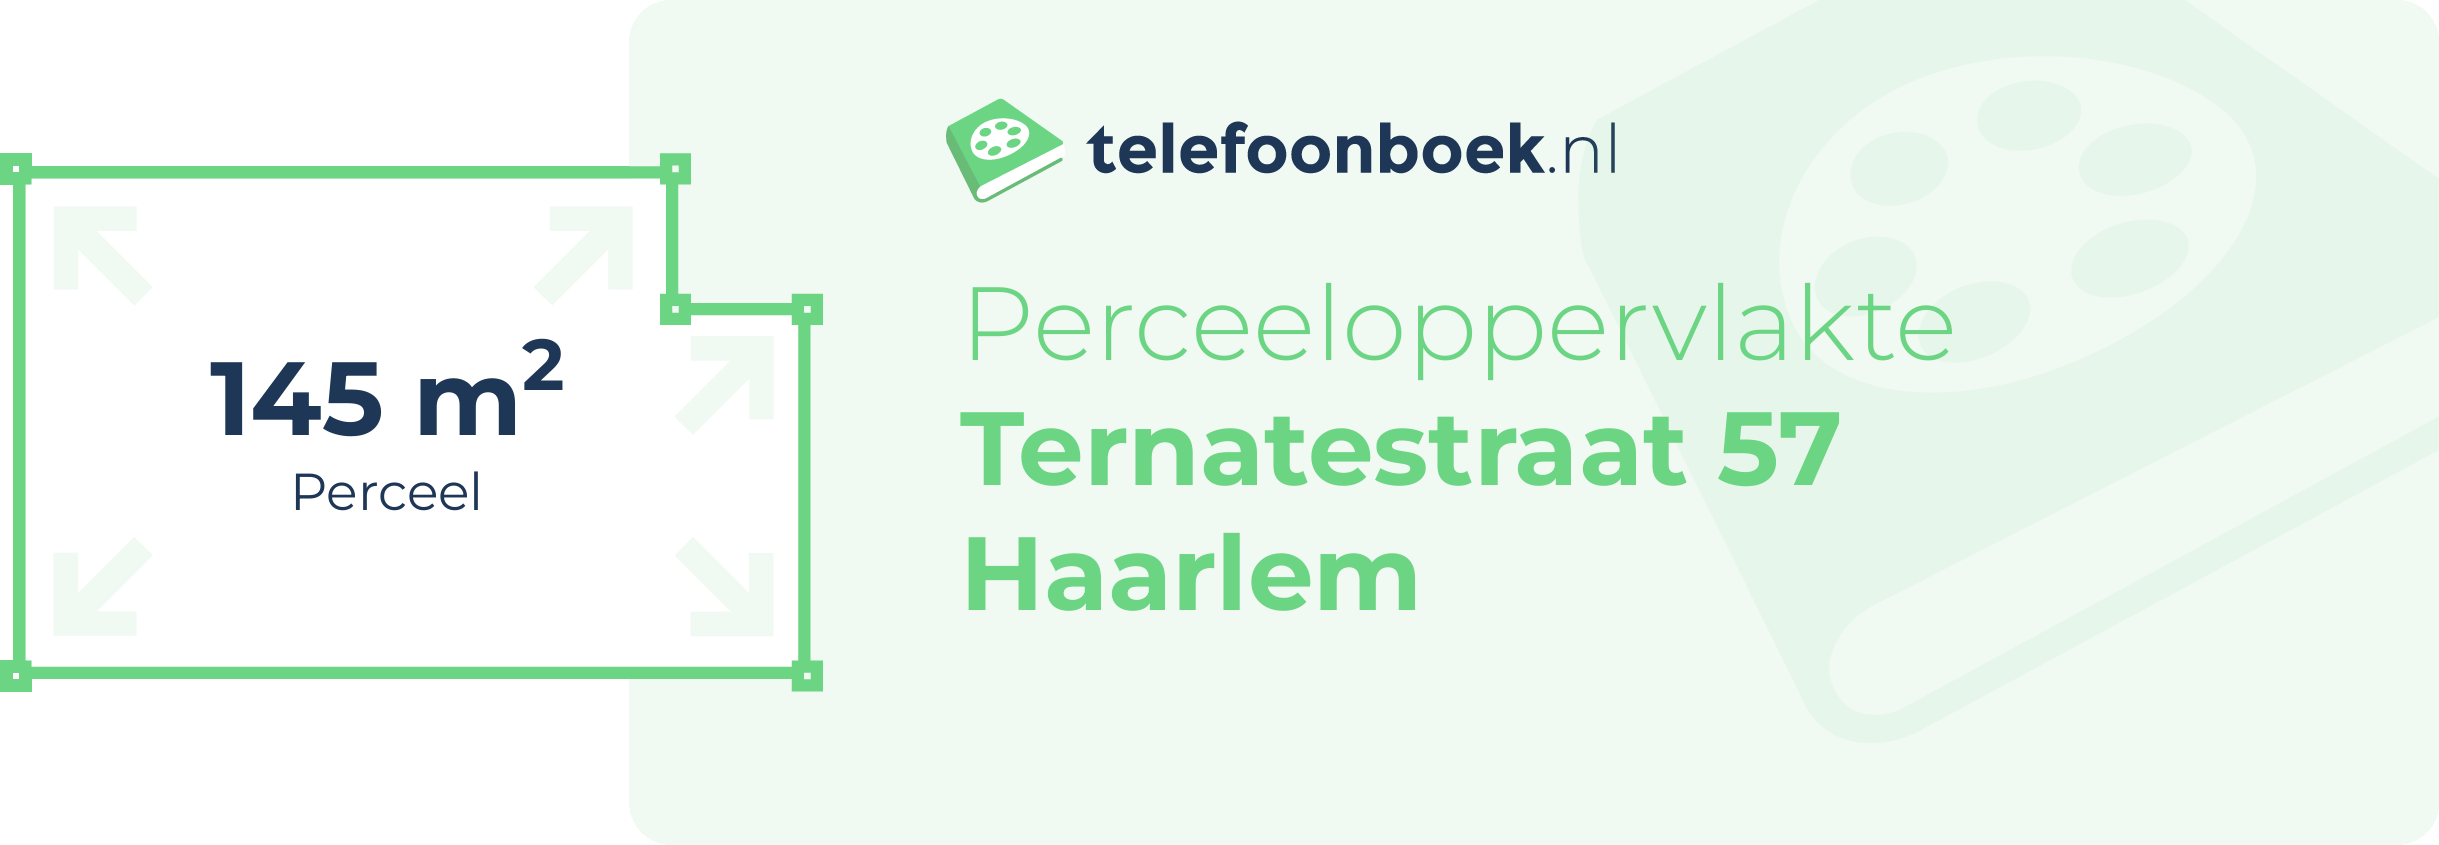 Perceeloppervlakte Ternatestraat 57 Haarlem